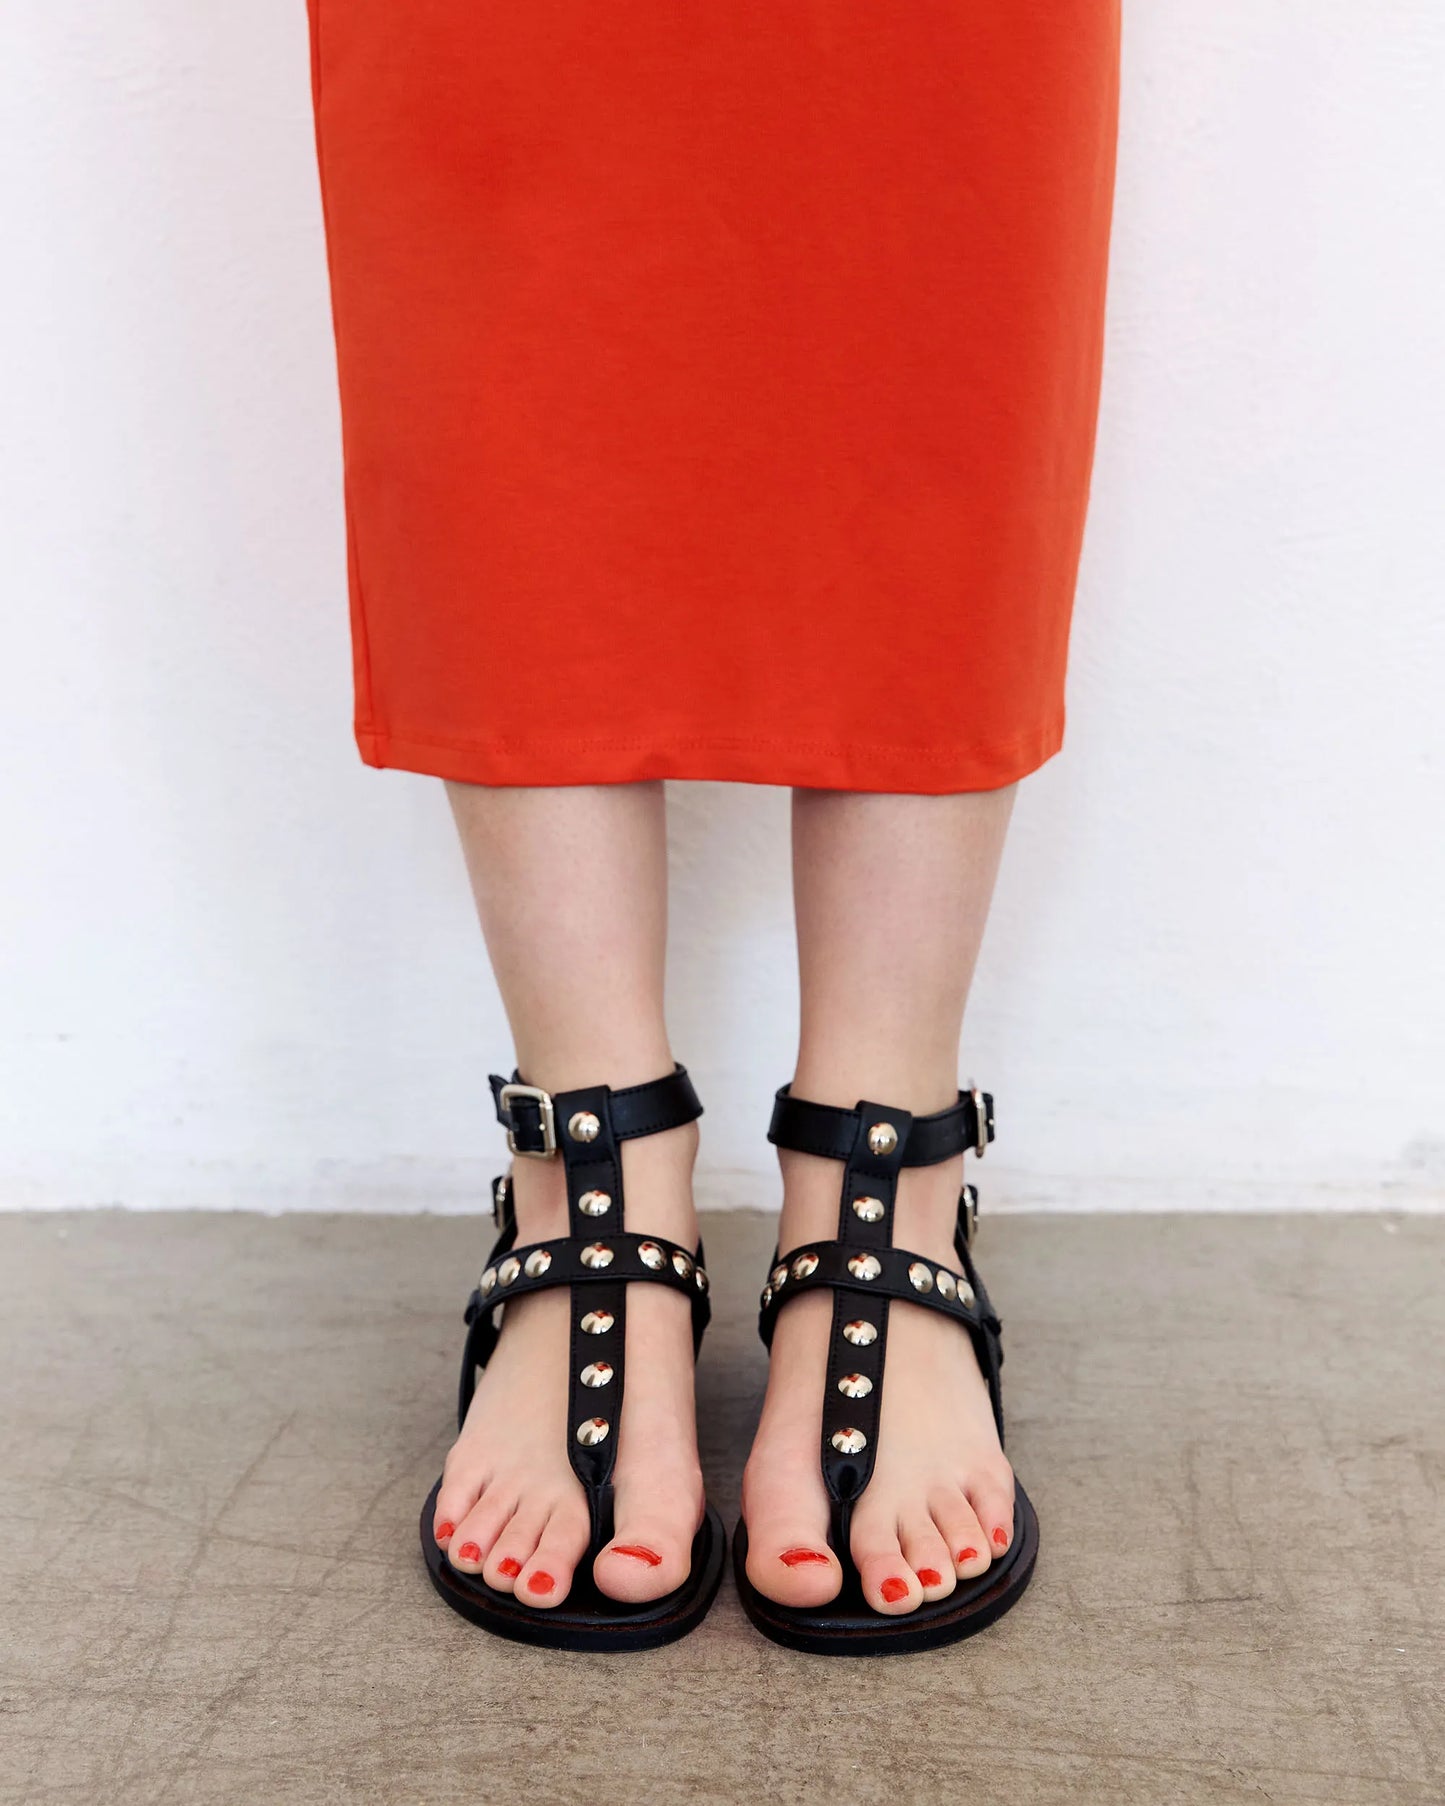 Nox Sandals gladiator sandals made of grape-based vegan leather